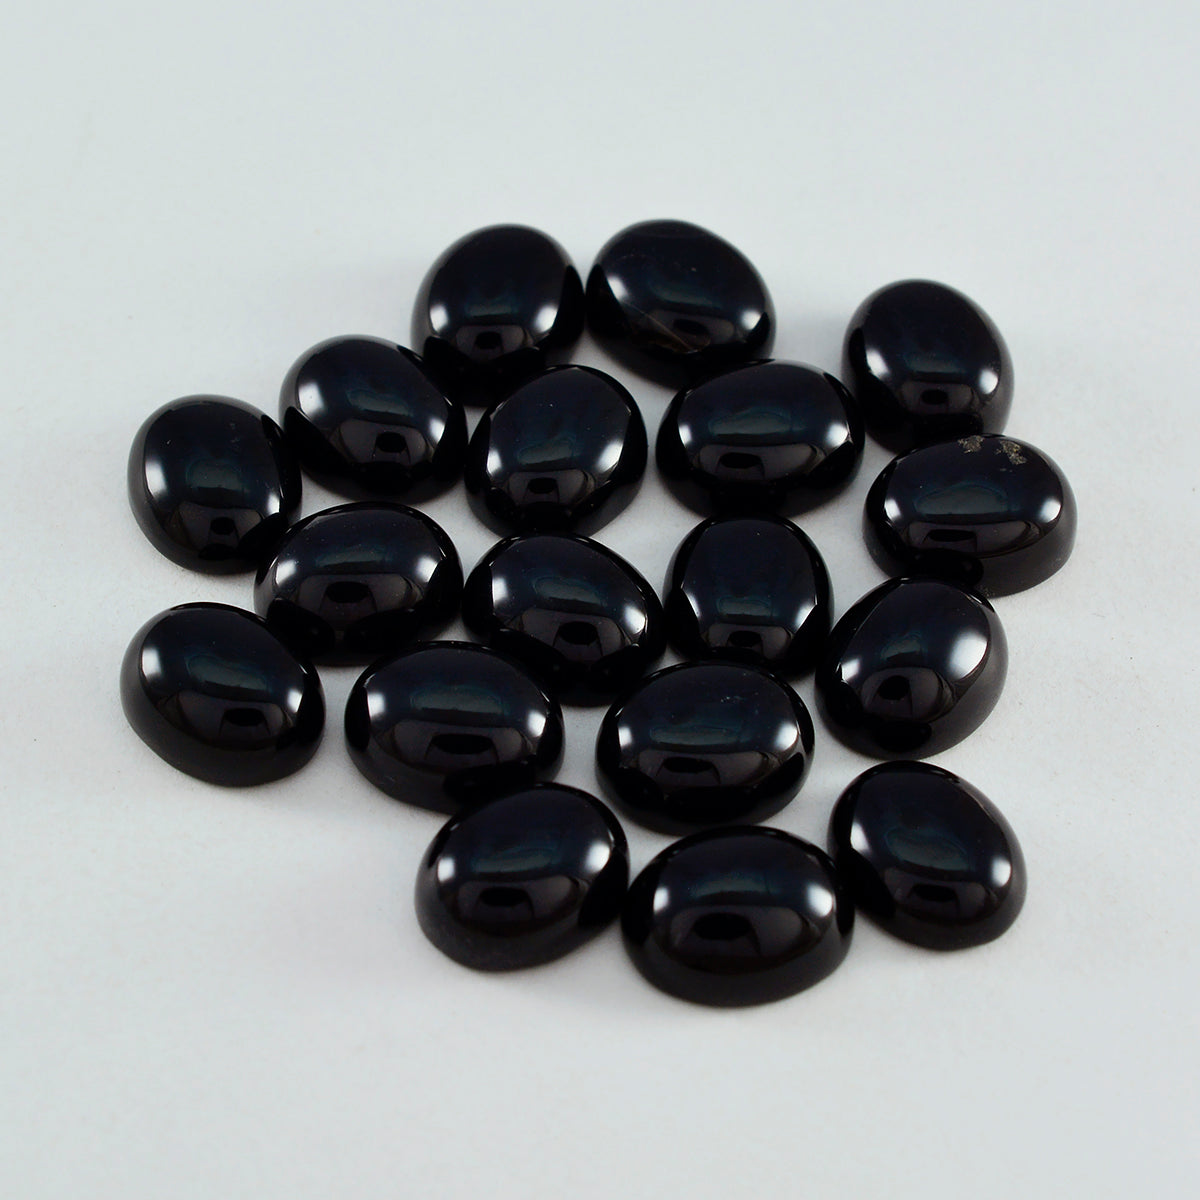 Riyogems 1PC zwarte onyx cabochon 5x7 mm ovale vorm mooie kwaliteitssteen